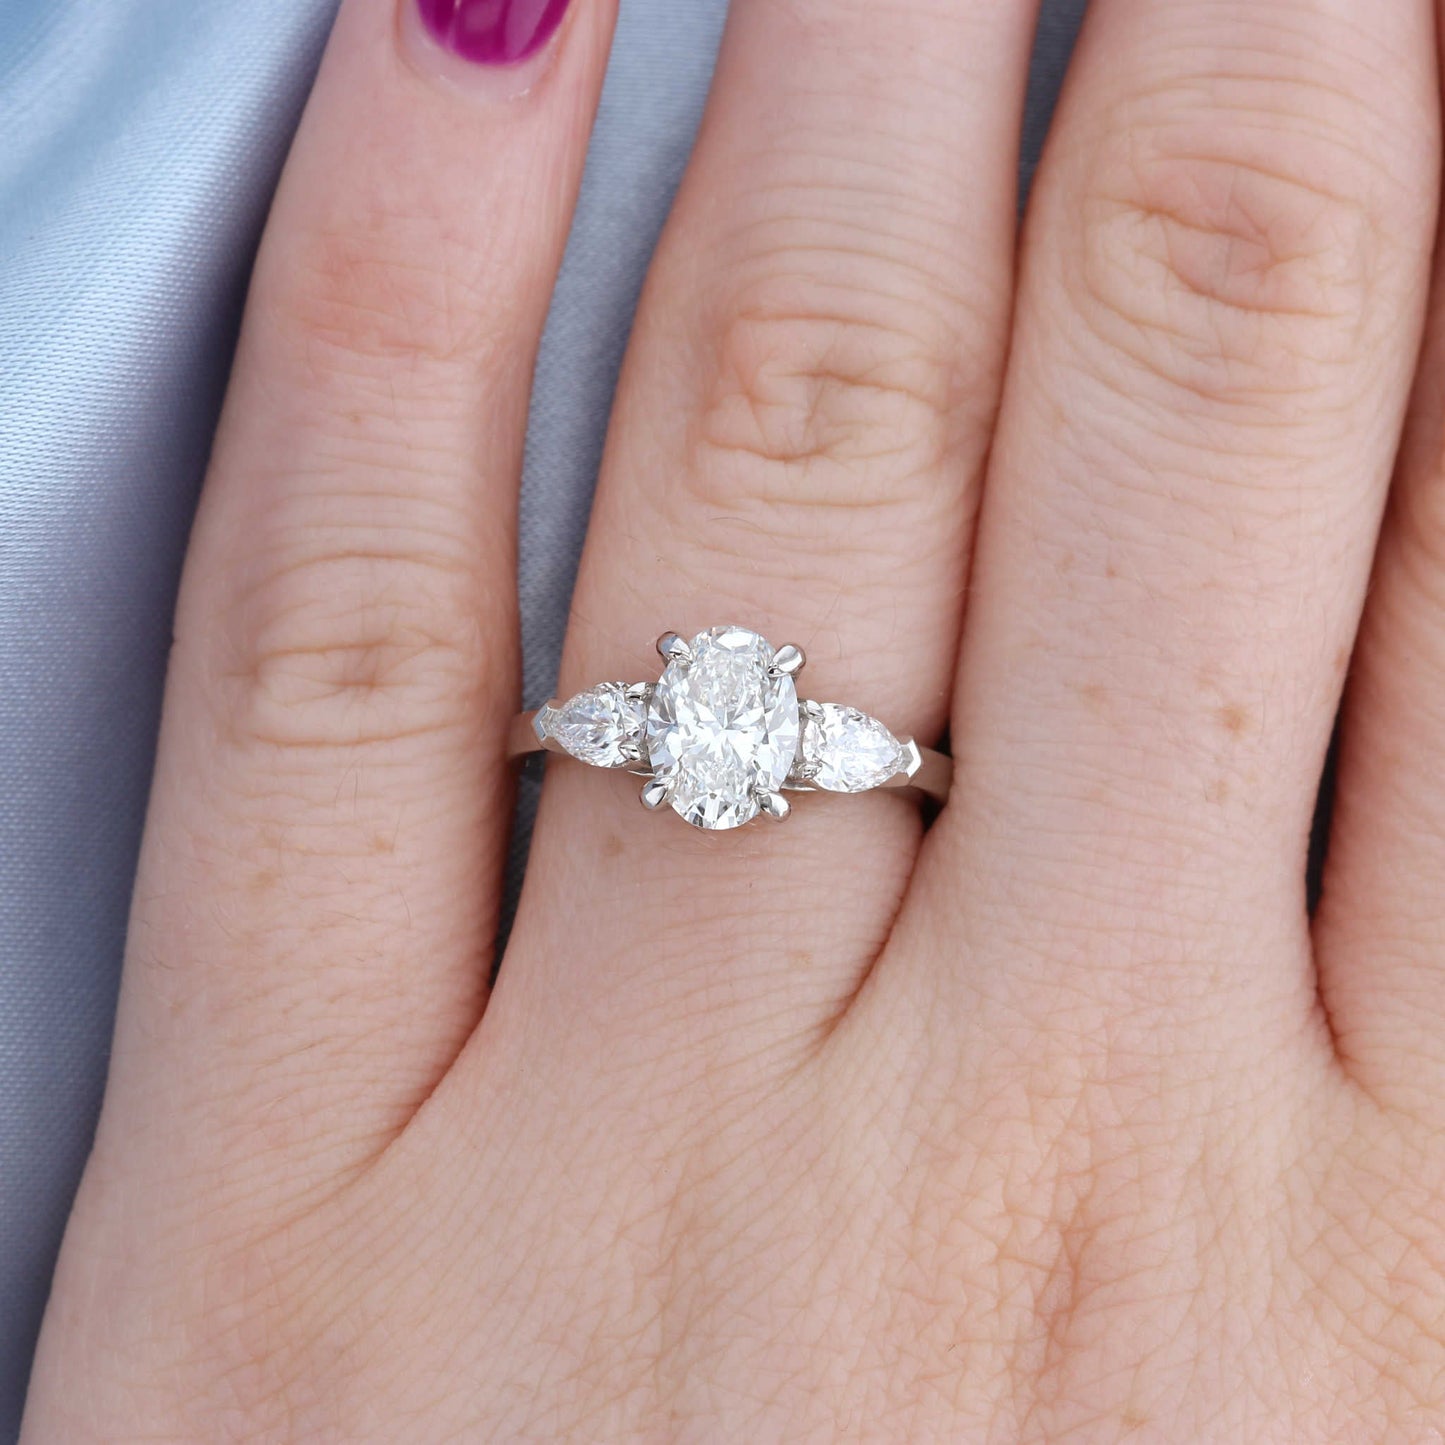 Platinum Oval Three Stone Diamond Engagement Ring on a Finger